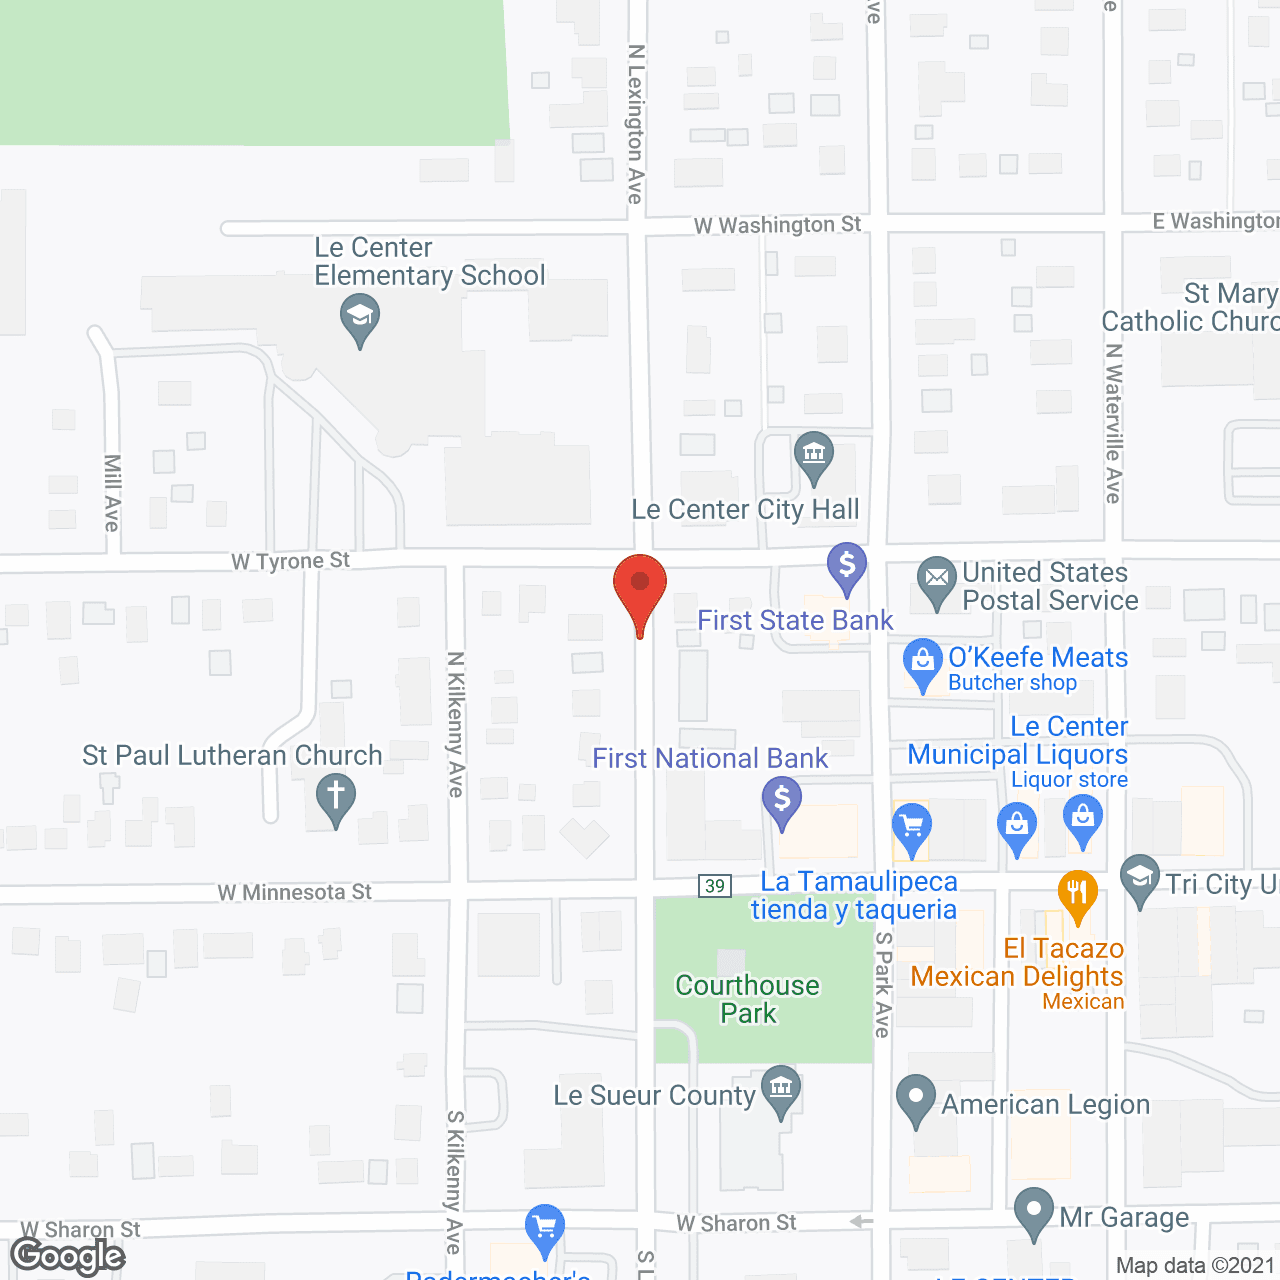 Centennial Plaza in google map